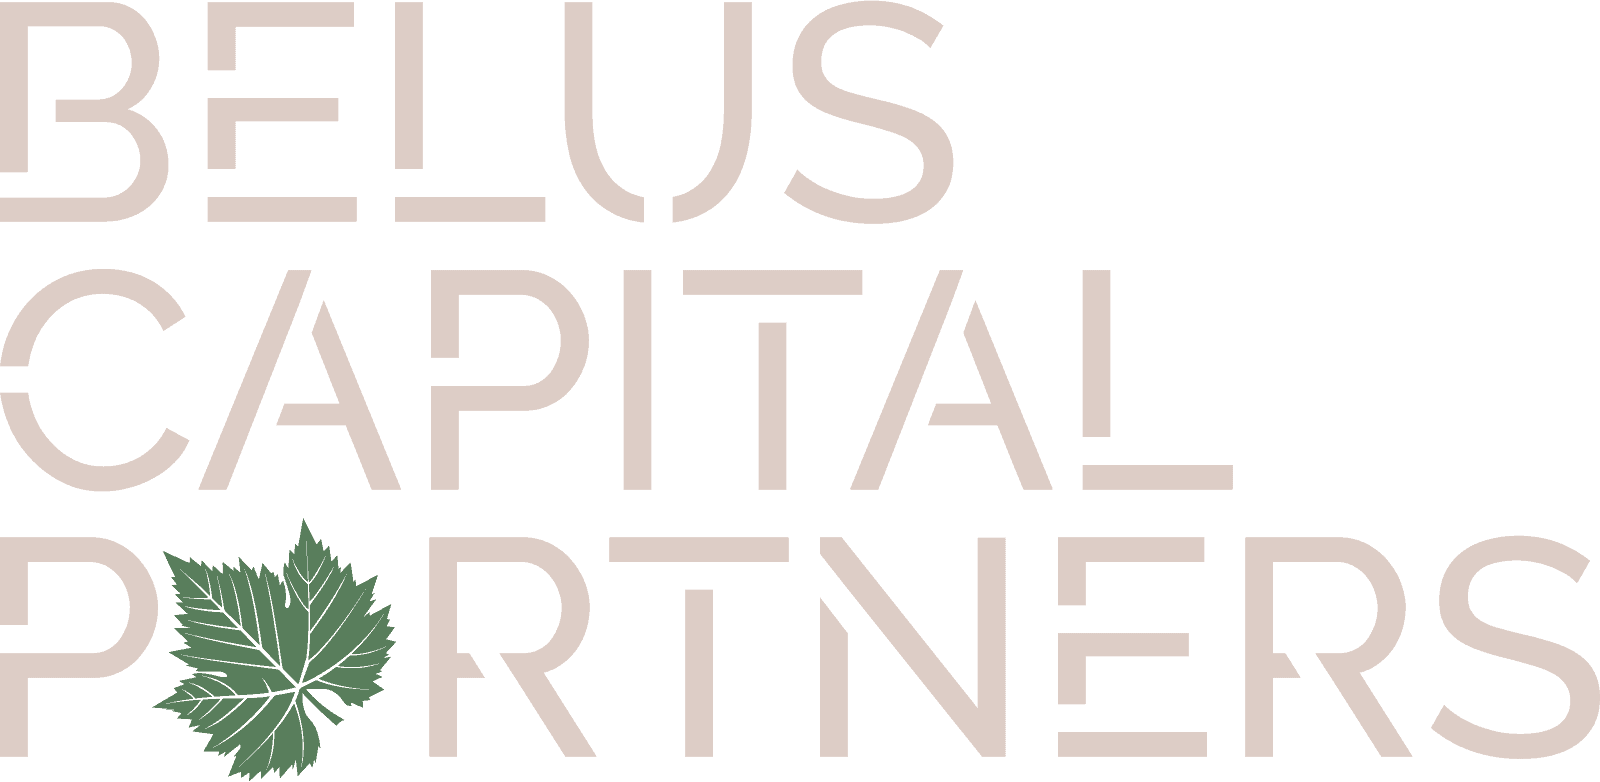 belus capital partners